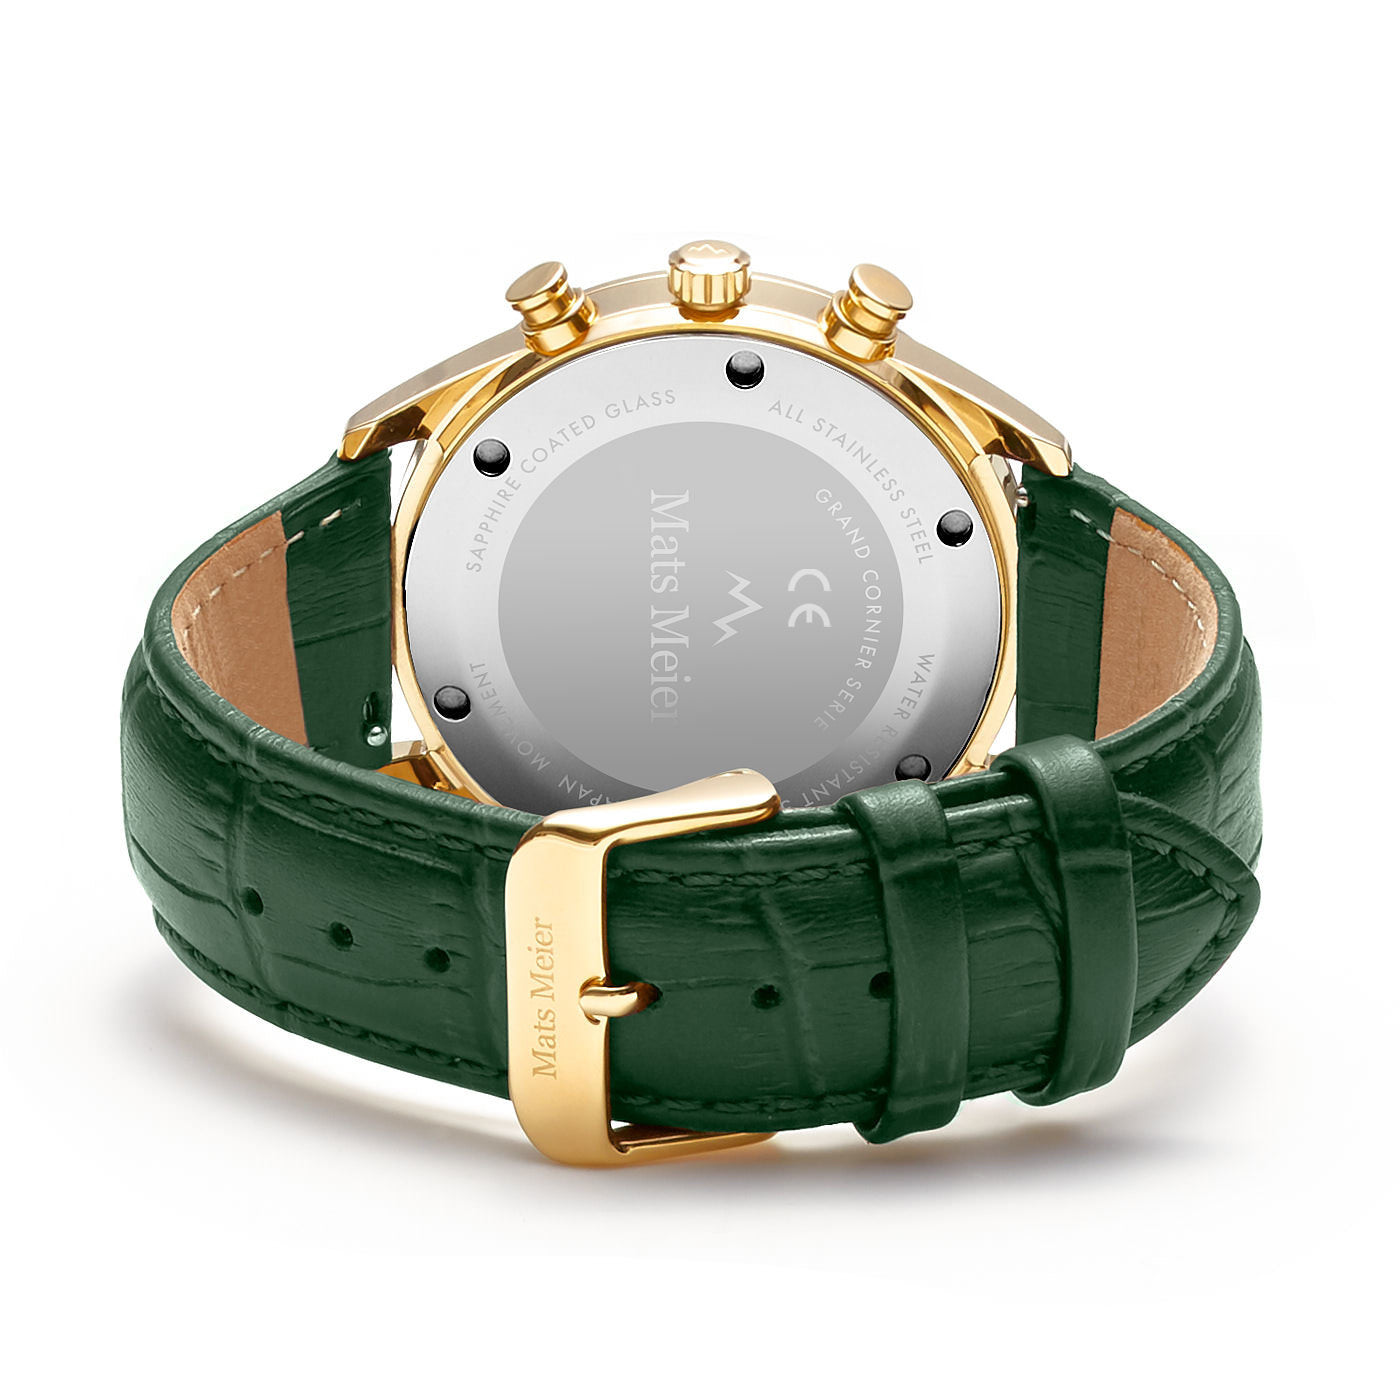 Grand Cornier chronograph mens watch green / gold colored